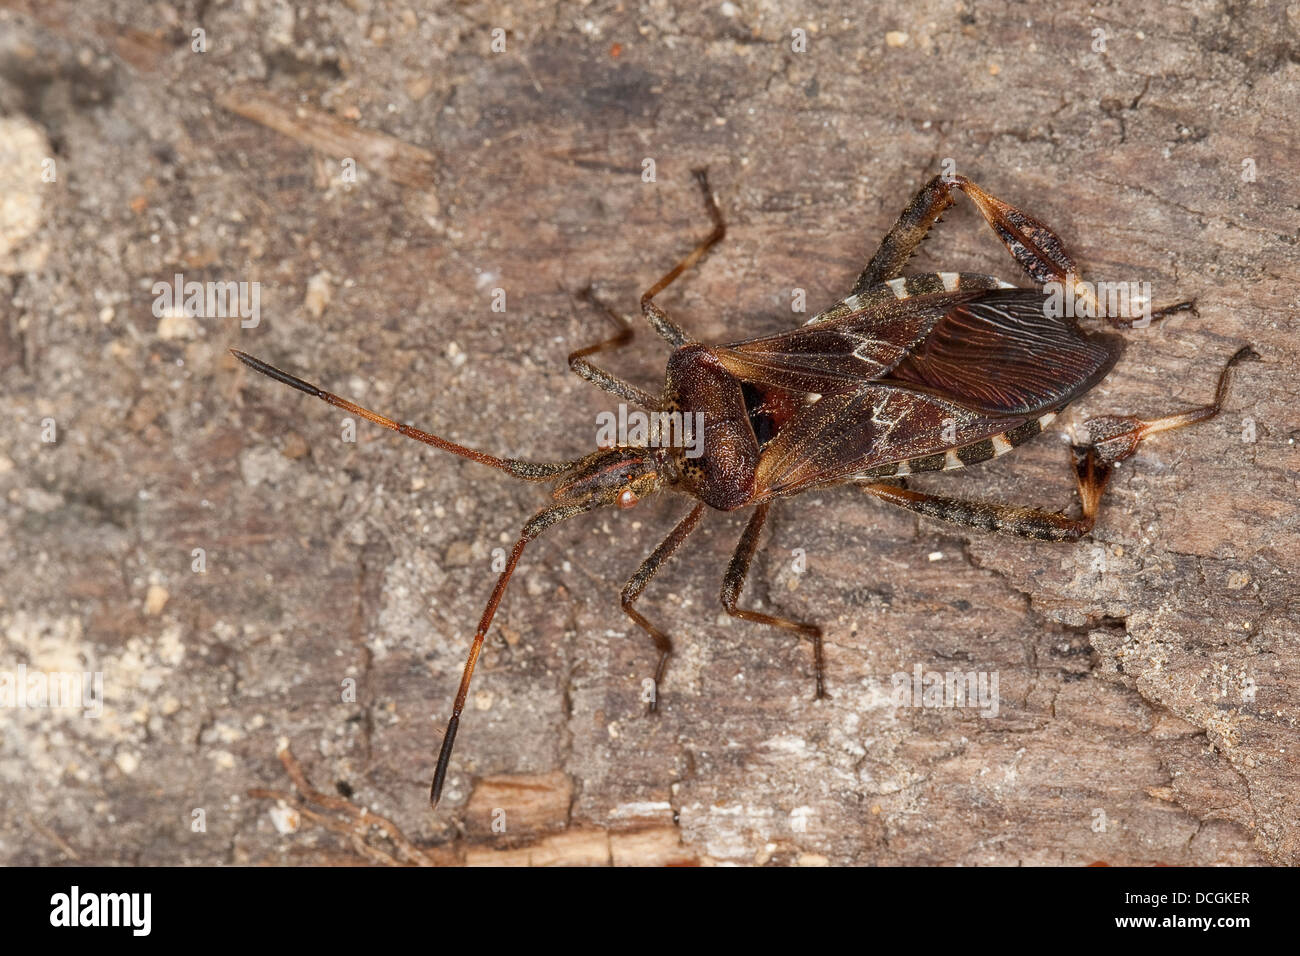 Western conifer seed bug, Amerikanische Kiefernwanze, Amerikanische Zapfenwanze, Leptoglossus occidentalis Stock Photo